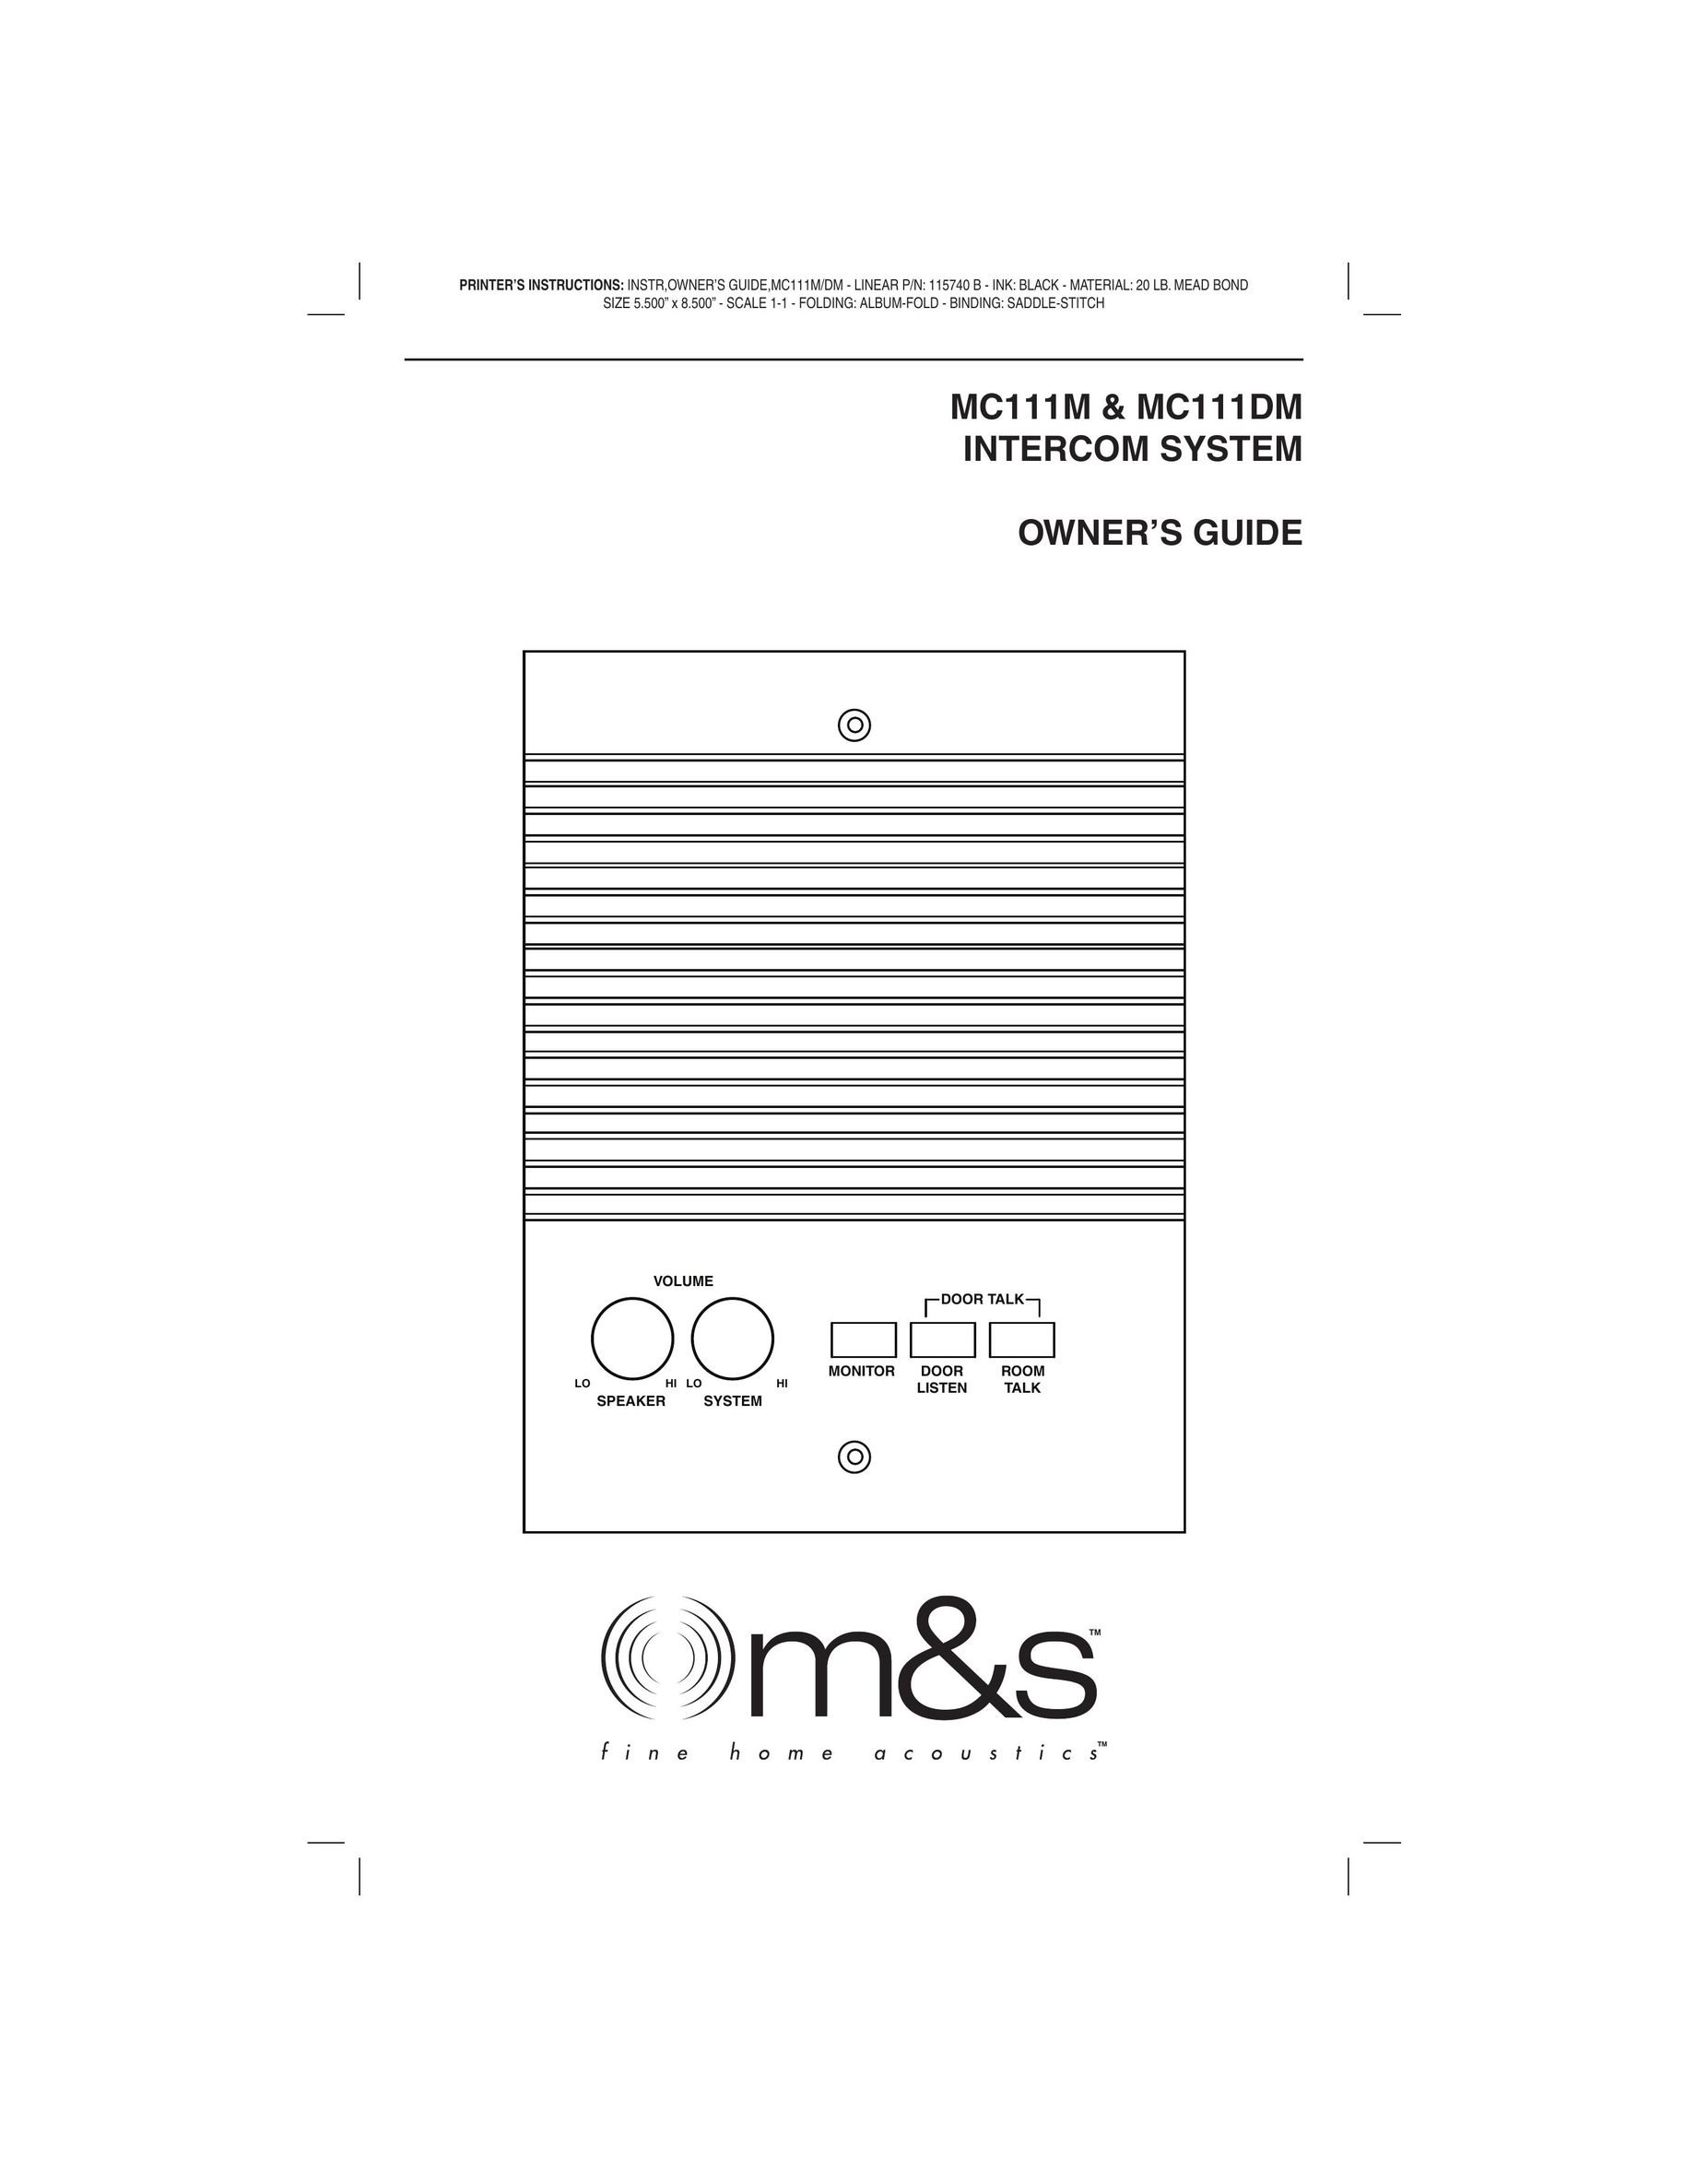 M&S Systems MC111DM Intercom System User Manual (Page 1)